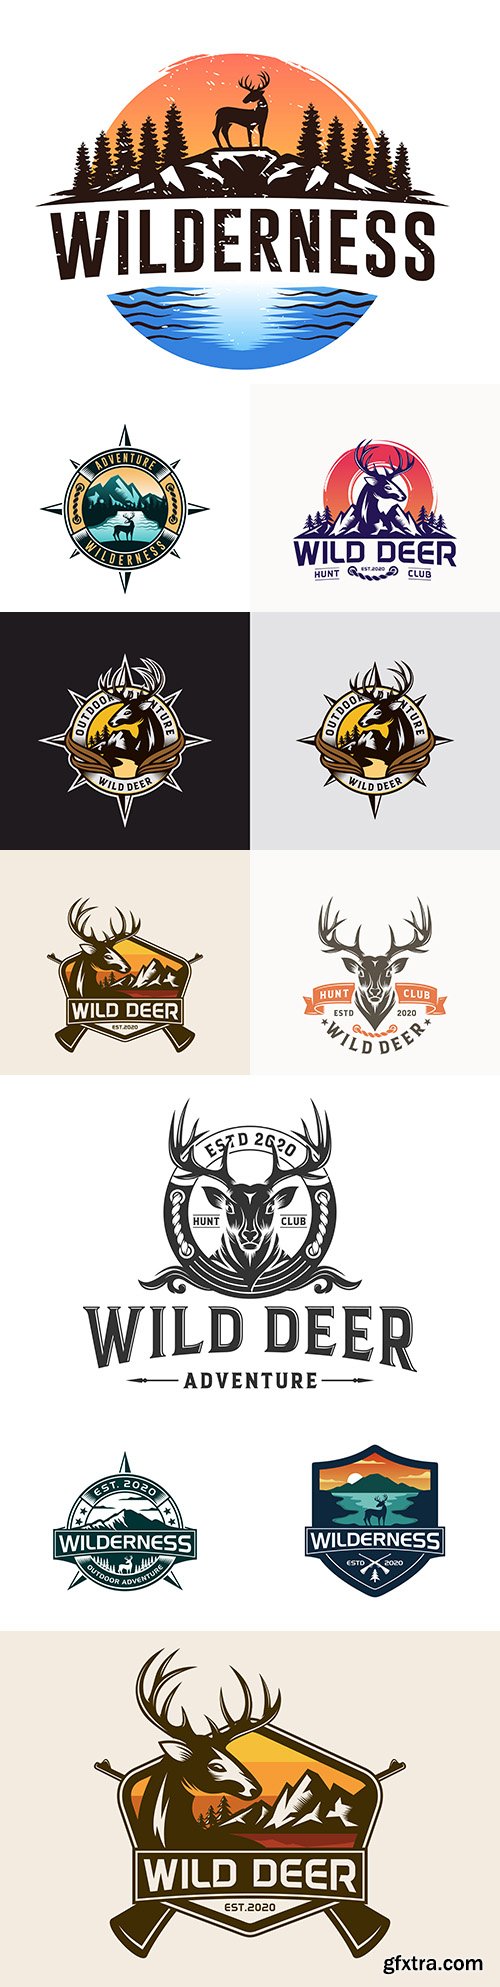 Wilderness brand name company logos corporate design